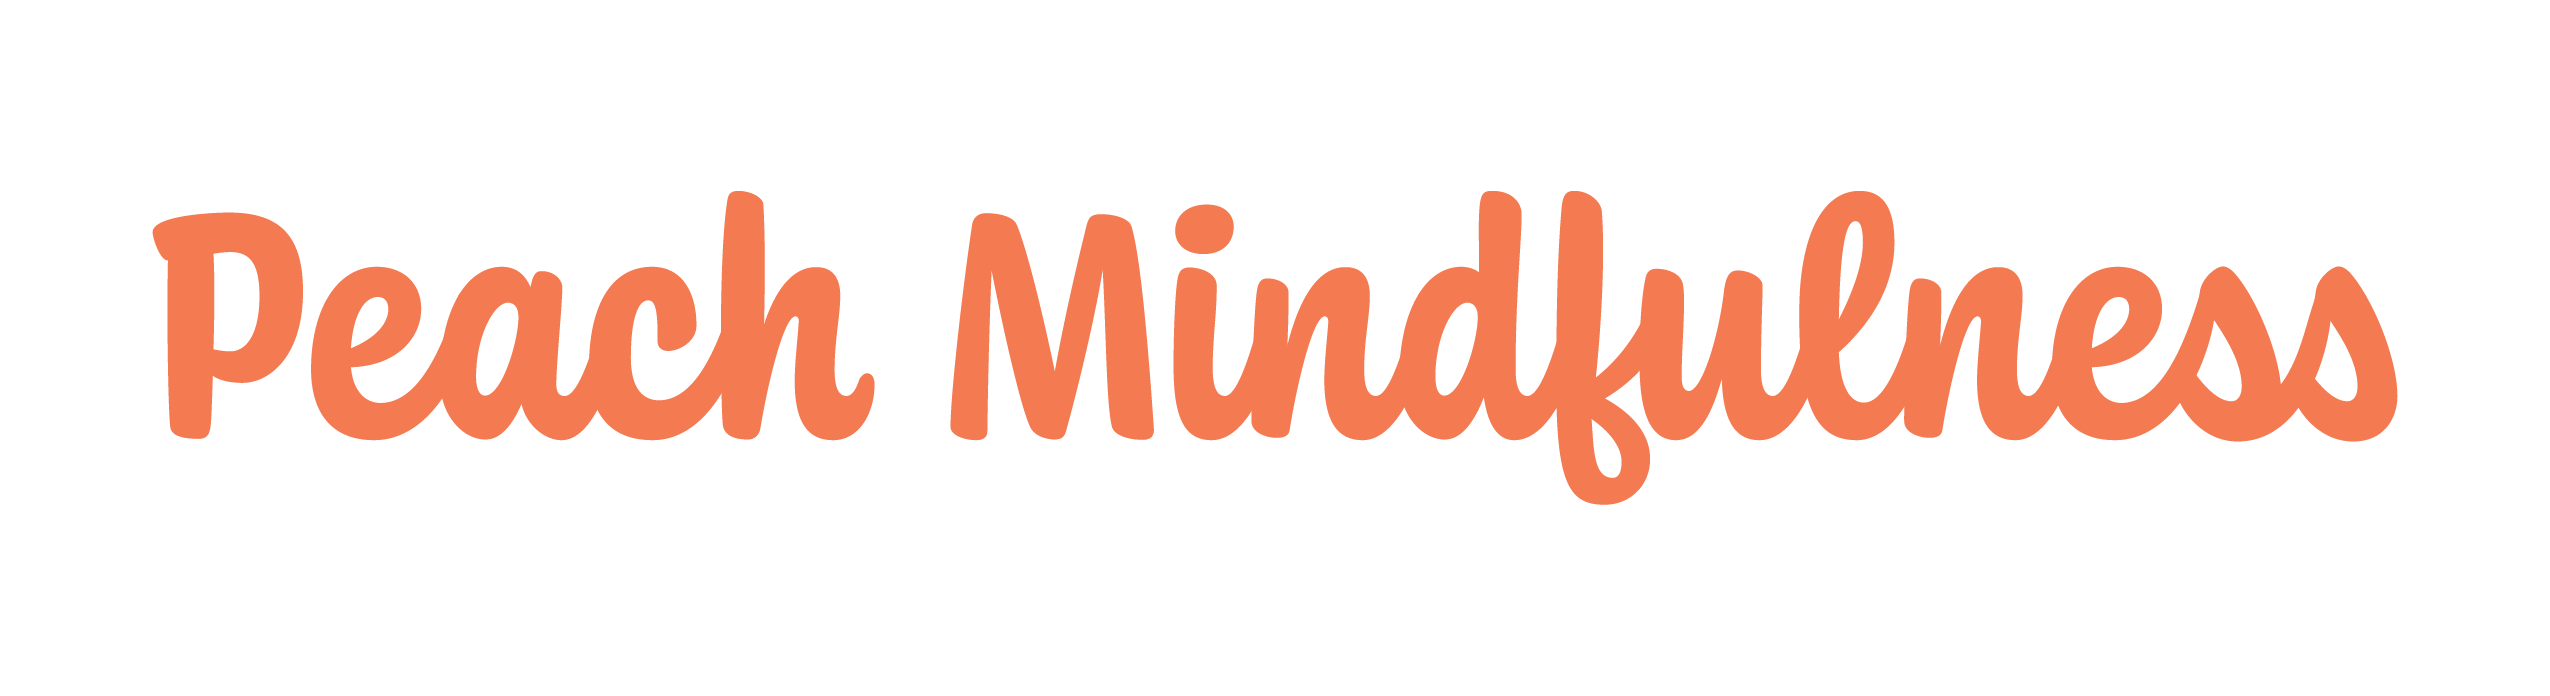 Peach Mindfulness Logo